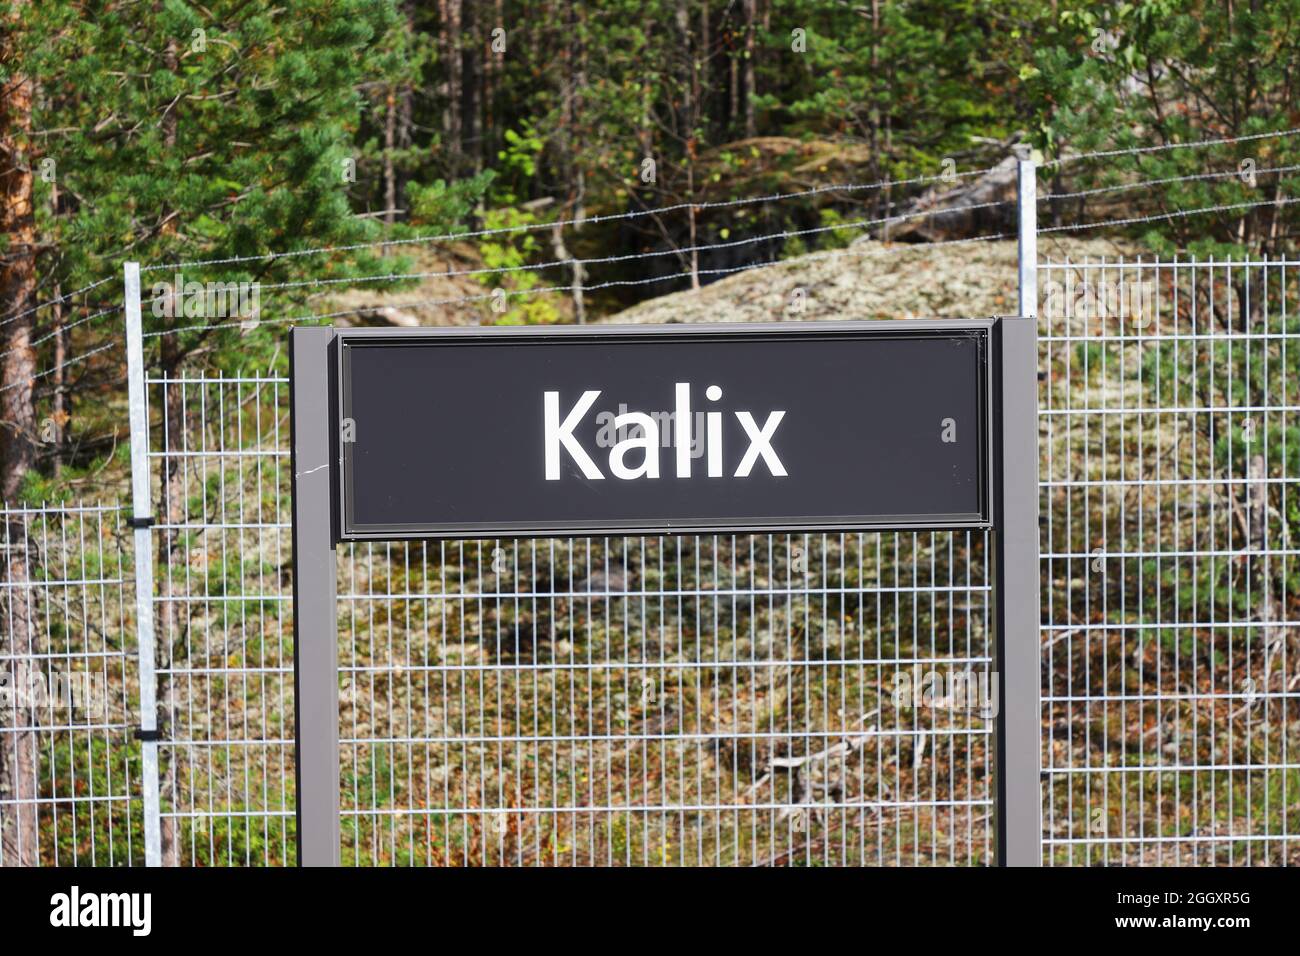 The Kalix railroad station name sign. Stock Photo